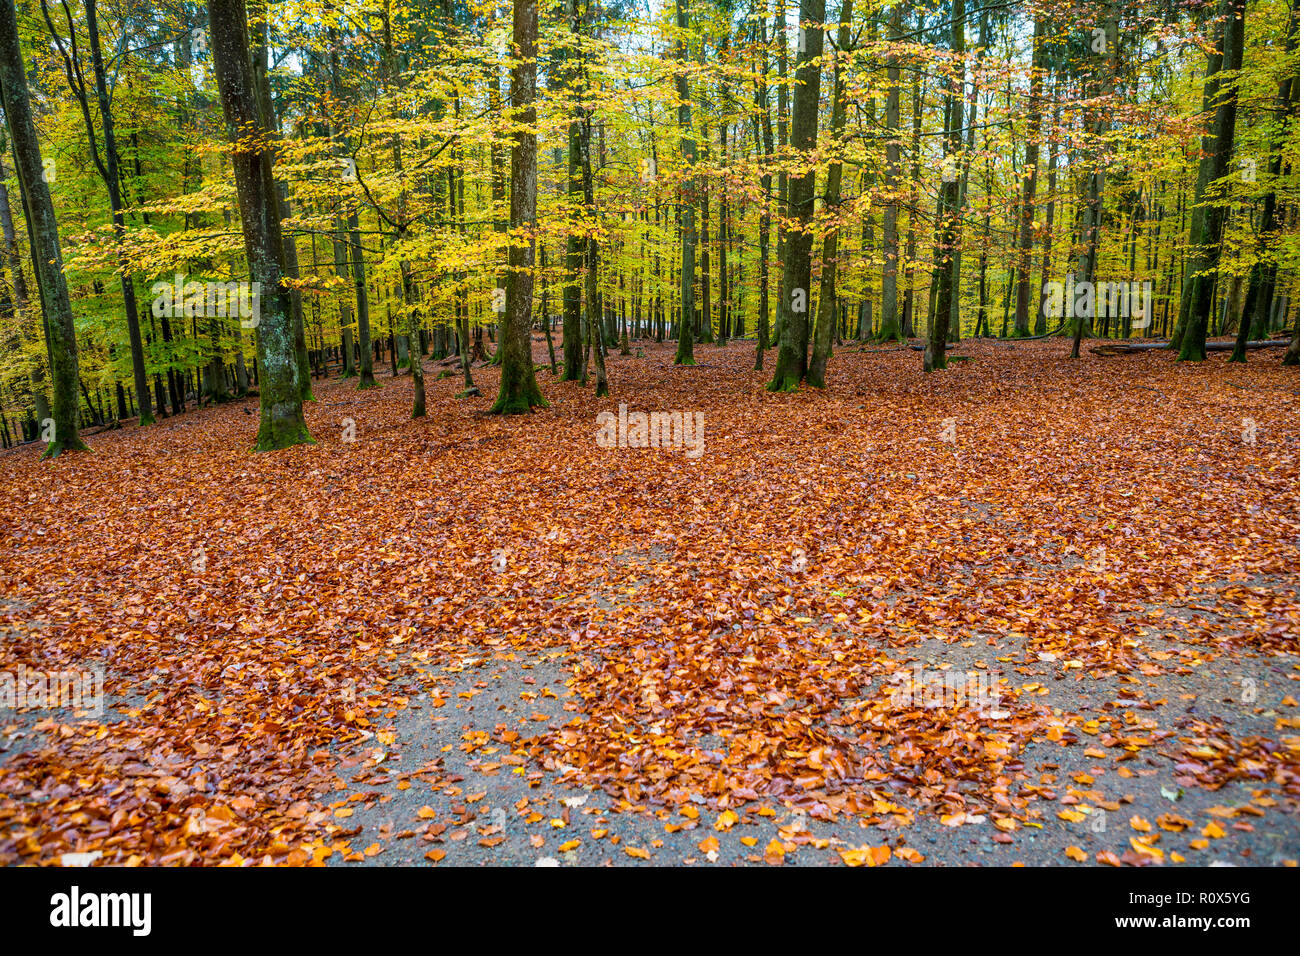 Autumn forest scene at Wildlife and Adventure Park Daun, Germany Stock Photo